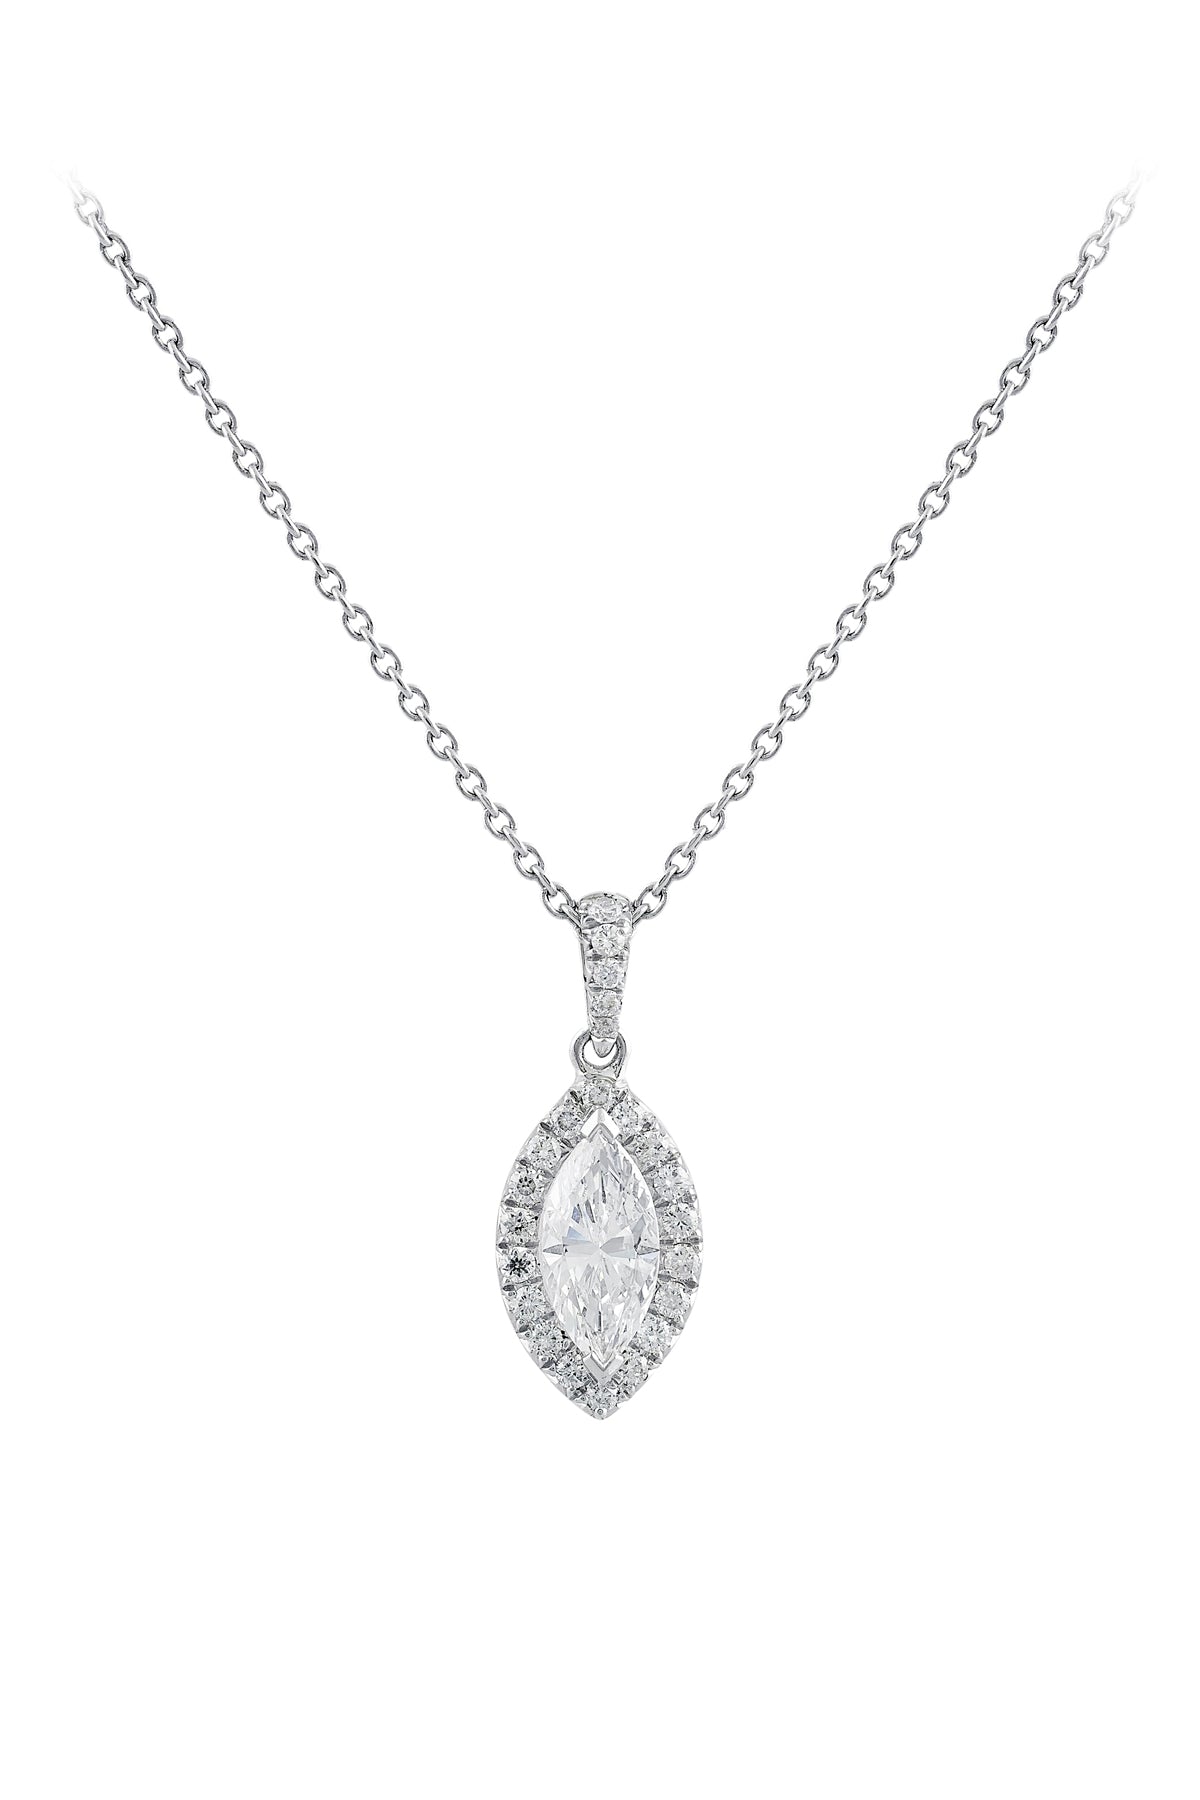 Marquise Cut Diamond Pendant With Diamond Halo from LeGassick Jewellery.